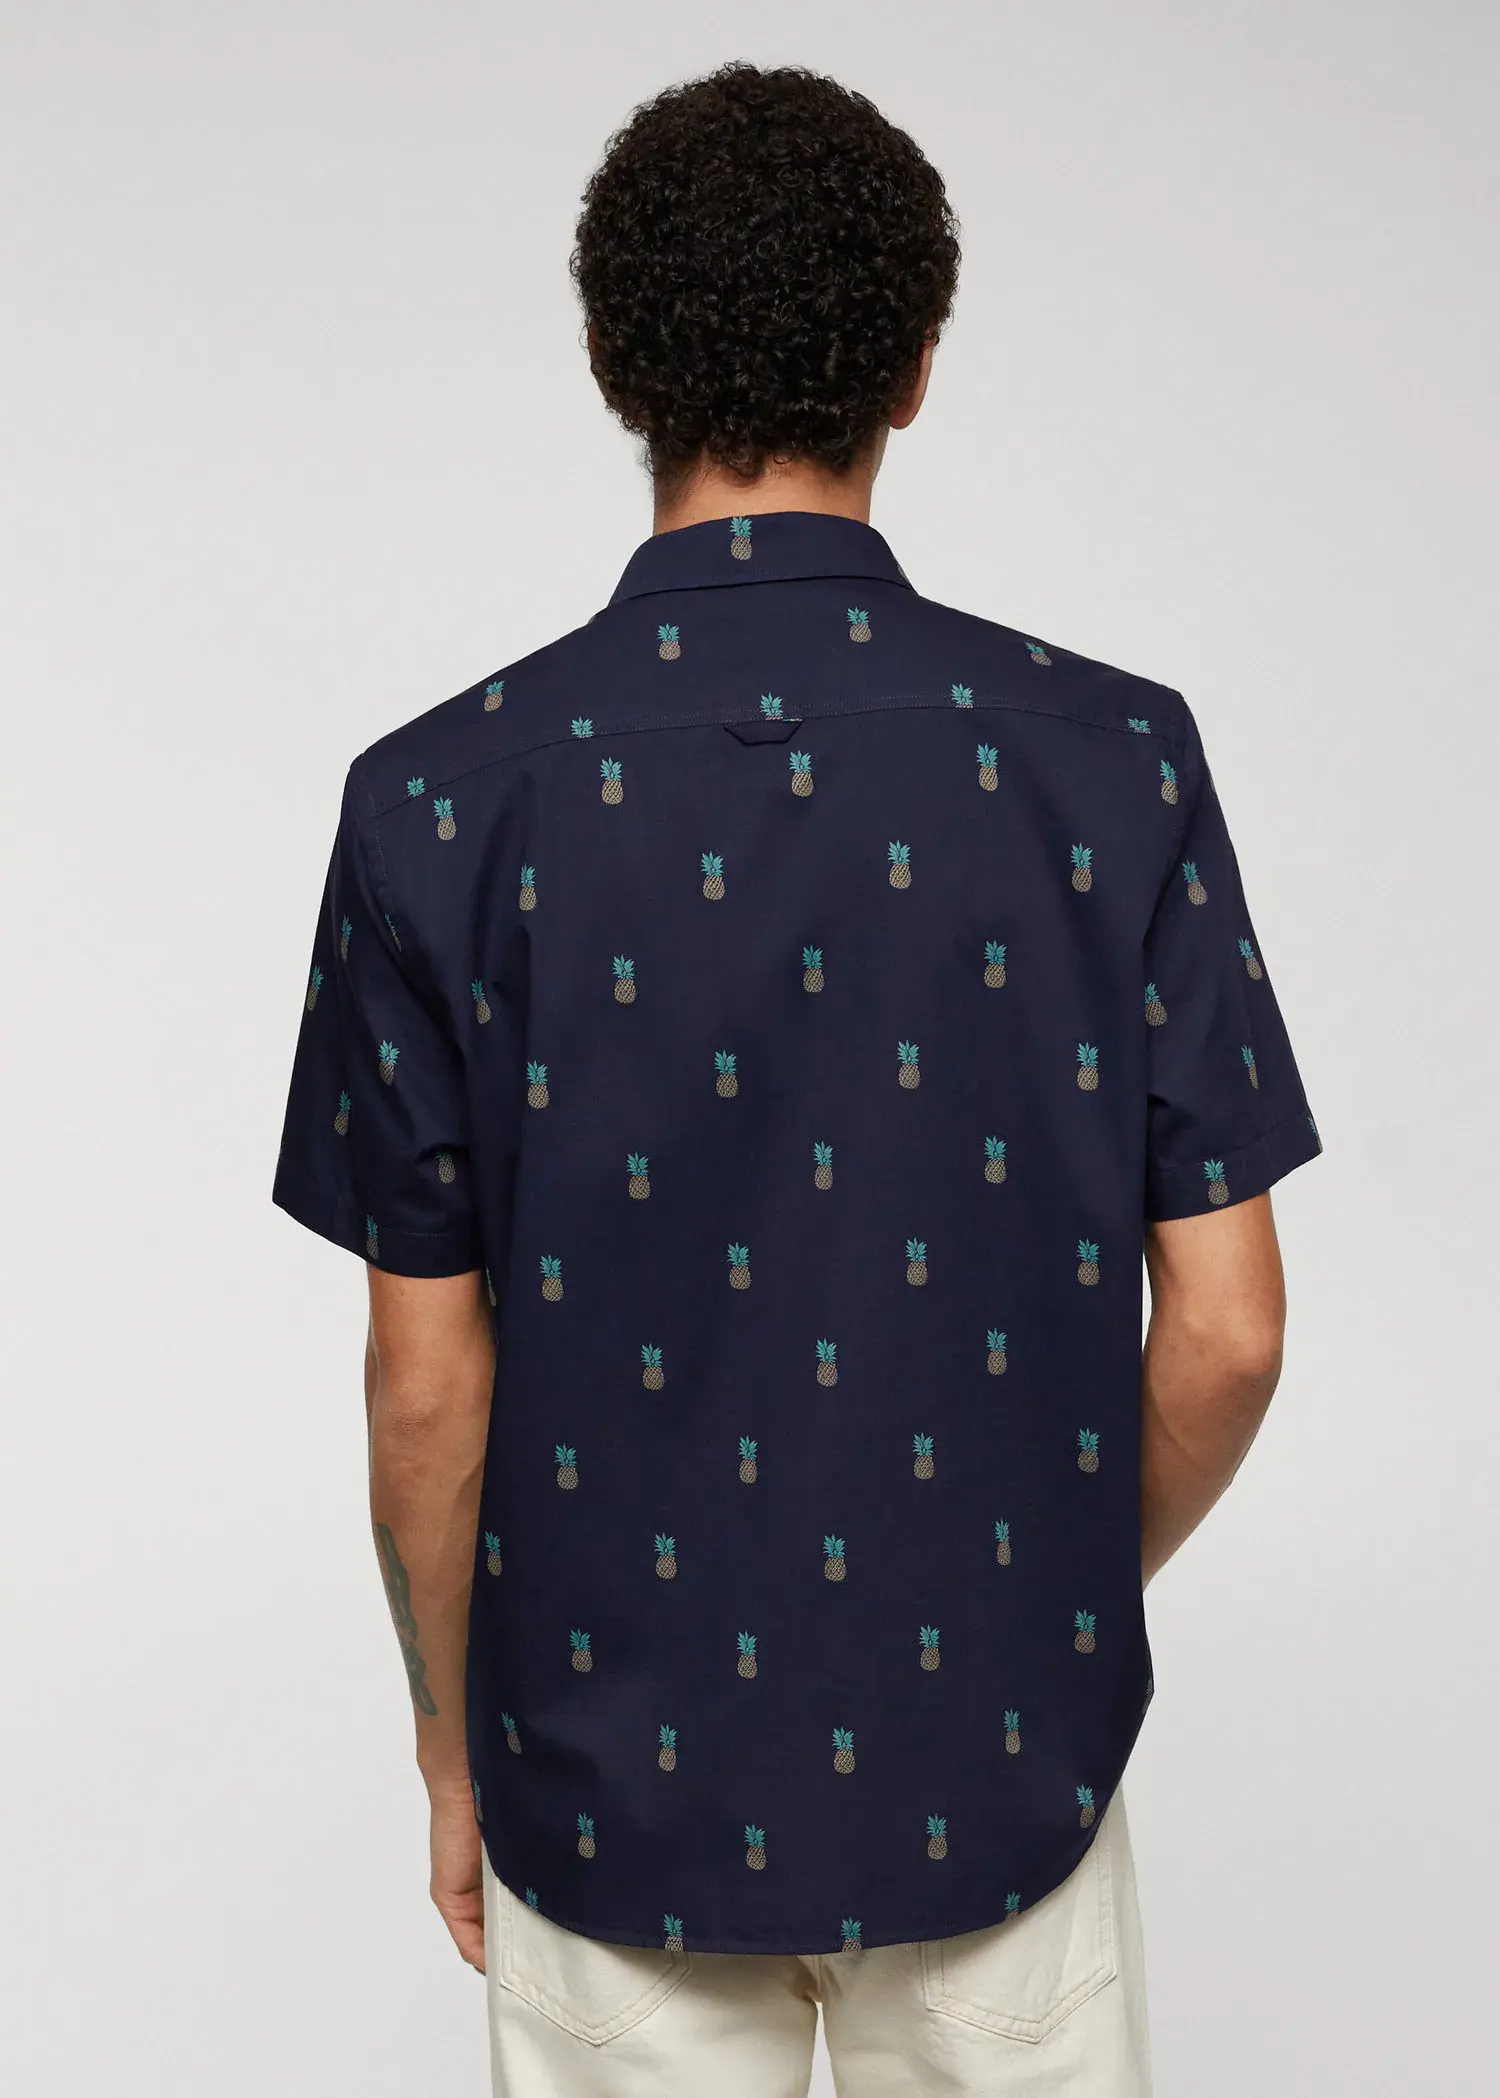 Mango 100% cotton shirt with pineapple print. 3